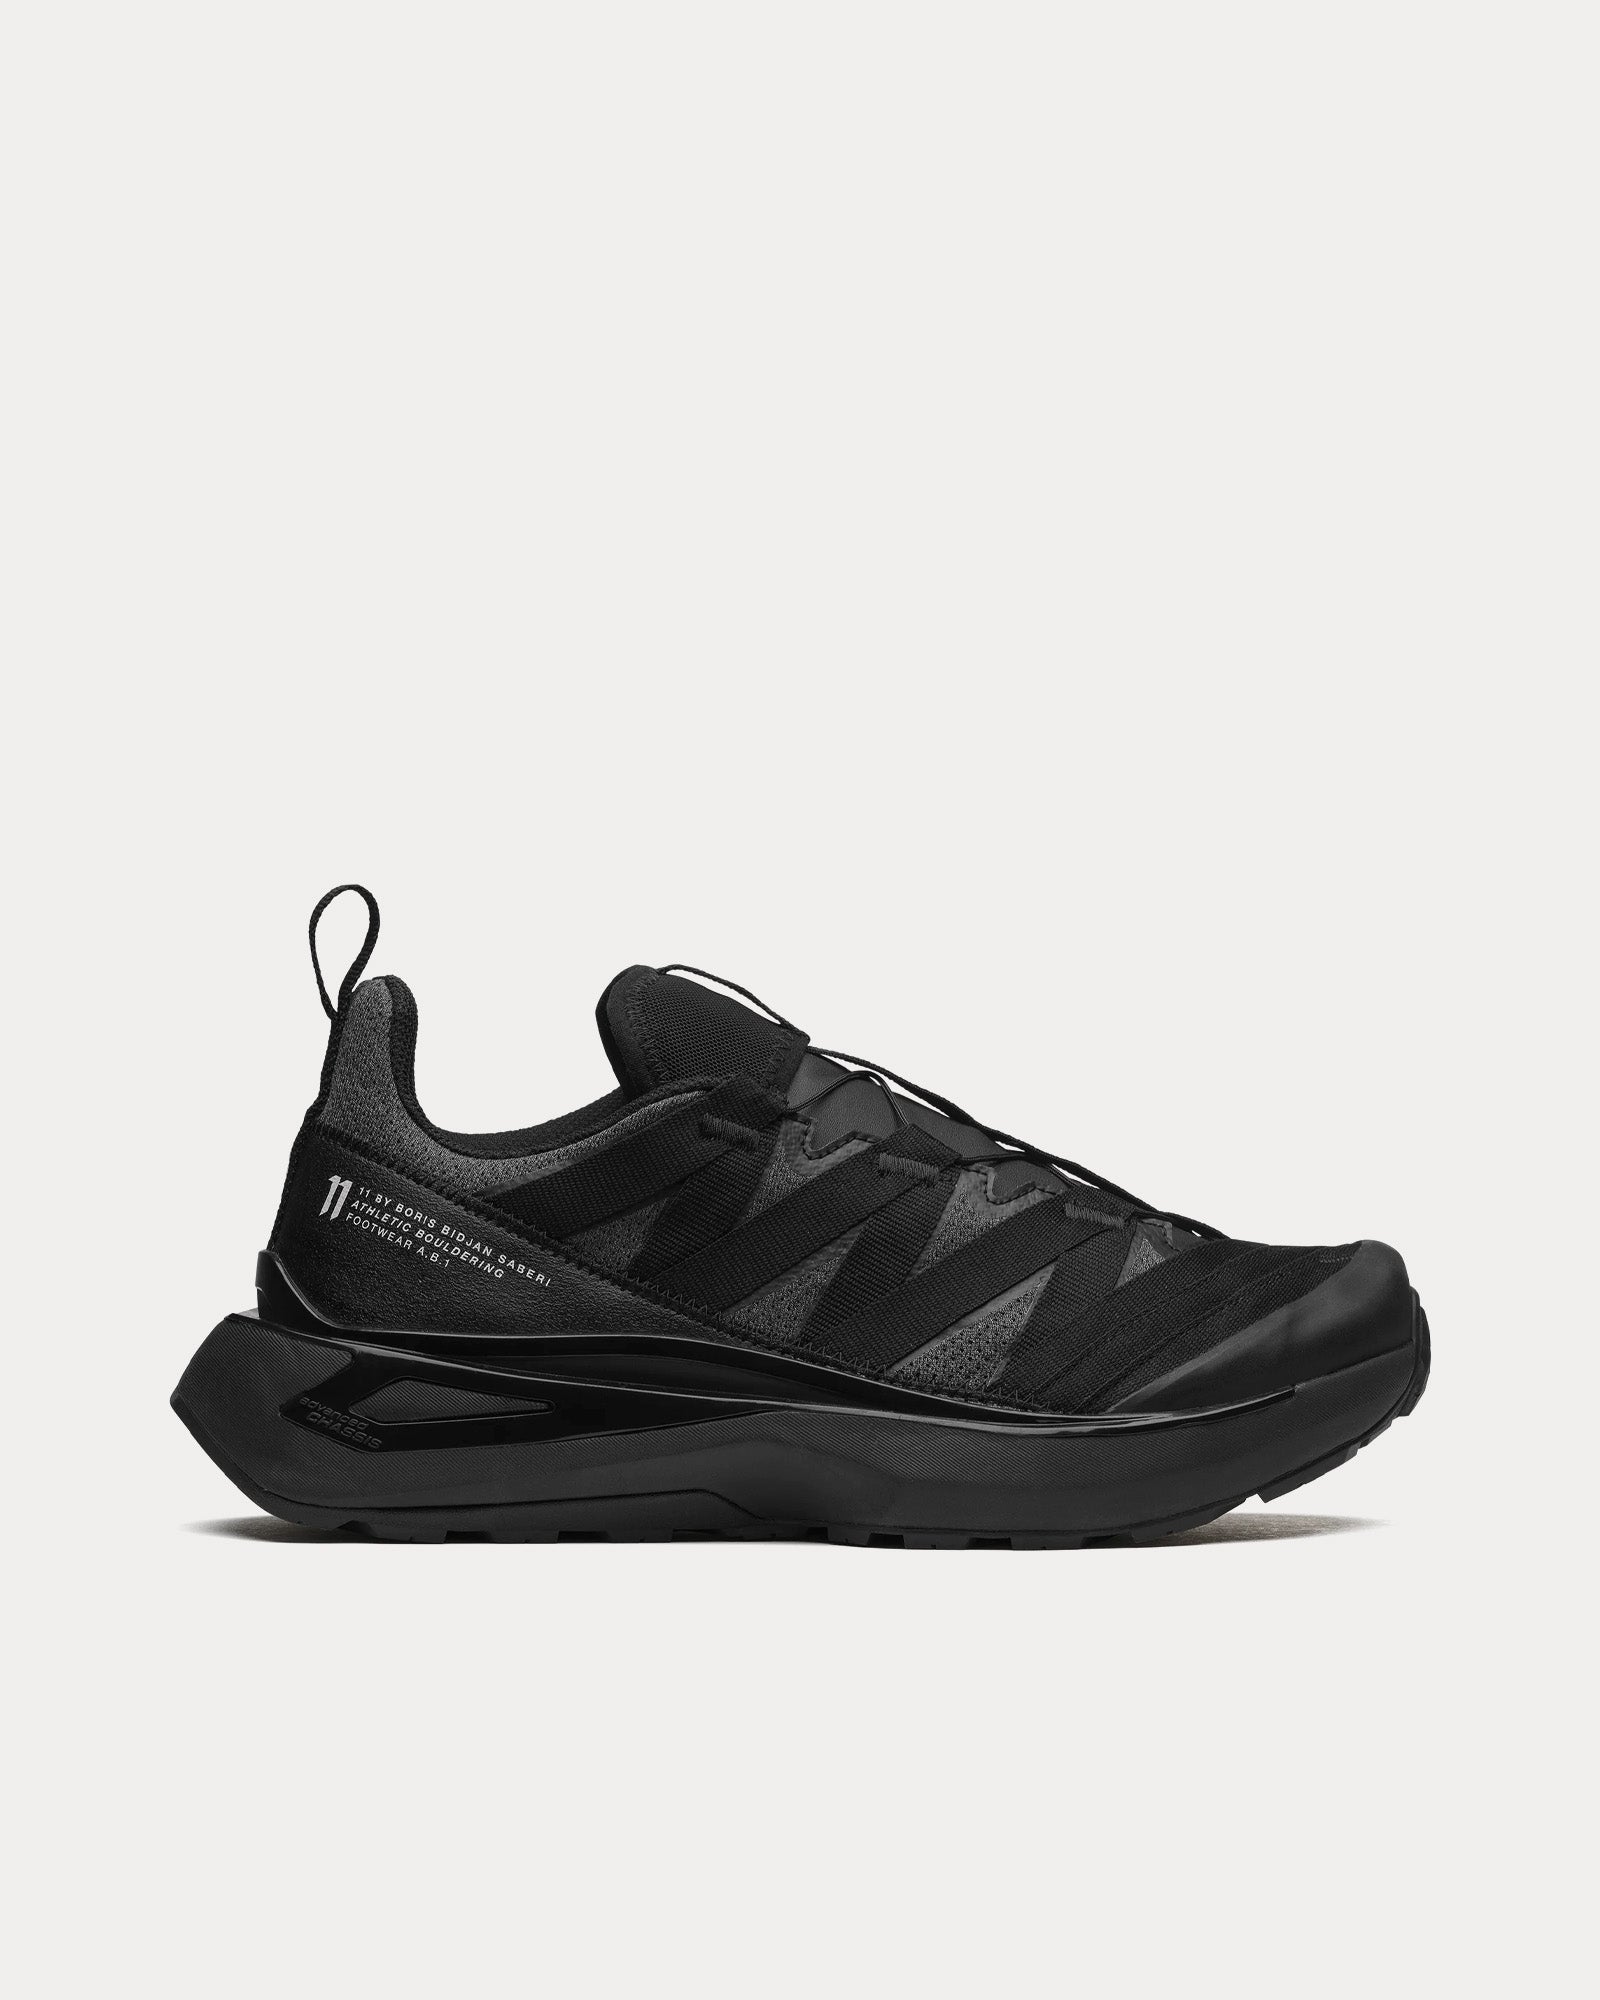 Salomon x 11 By Boris Bidjan Saberi - 11s Footwear A.B.1 Black / Black / Black Low Top Sneakers